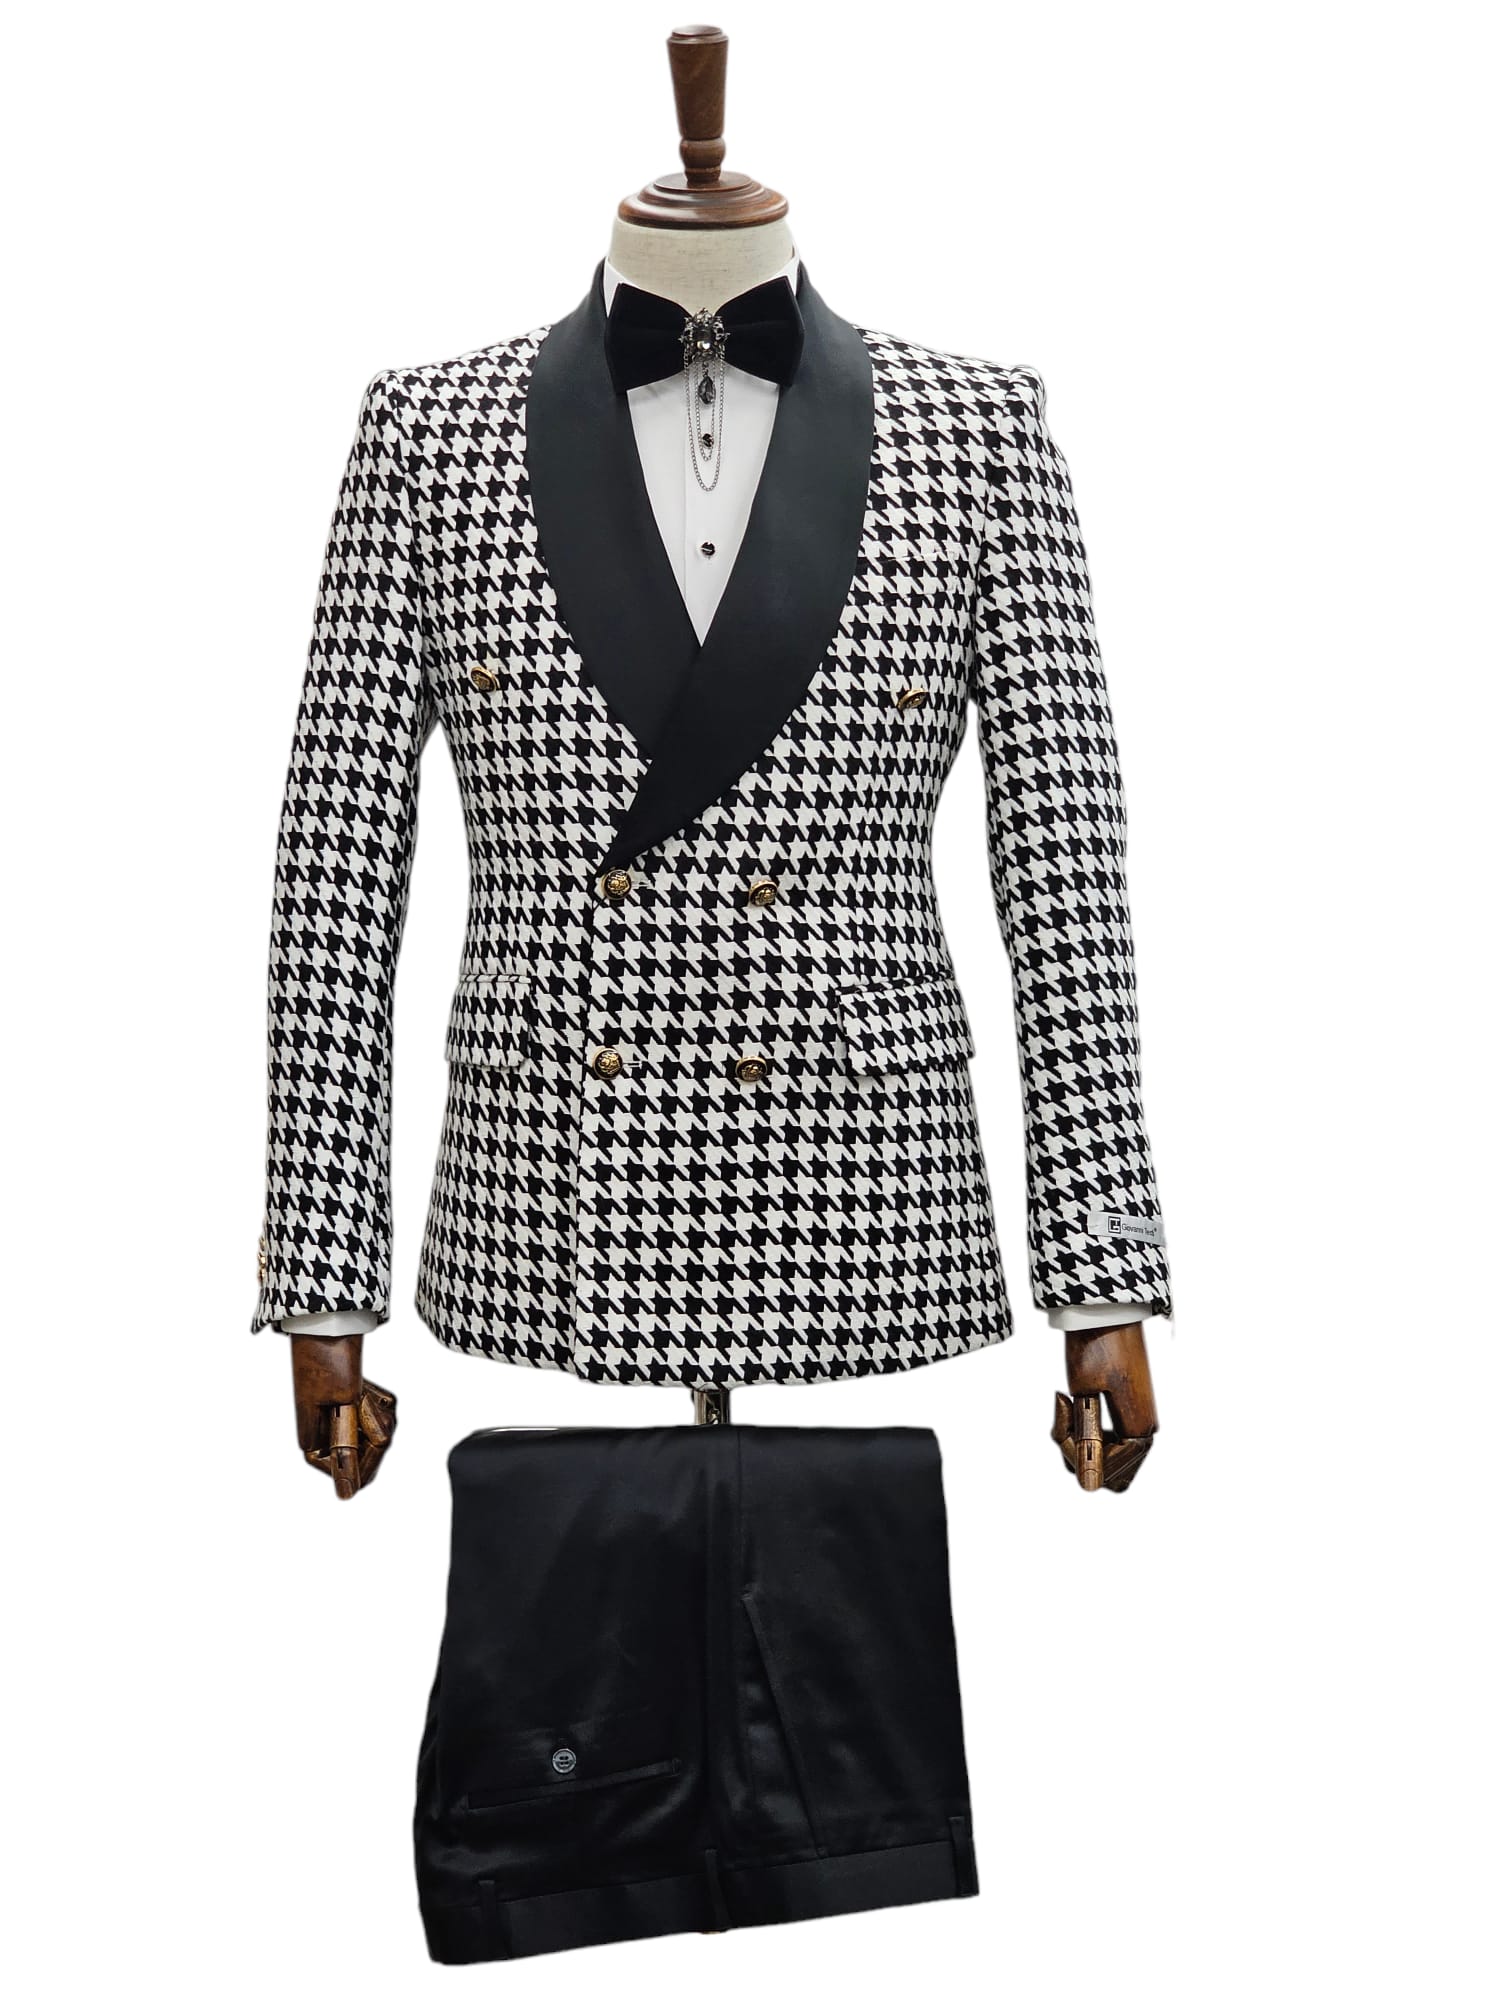 Luxury Plaid Suits Men Formal Grooms Wedding Tuxedo Double Breasted Coat Pant Design Latest Fashion